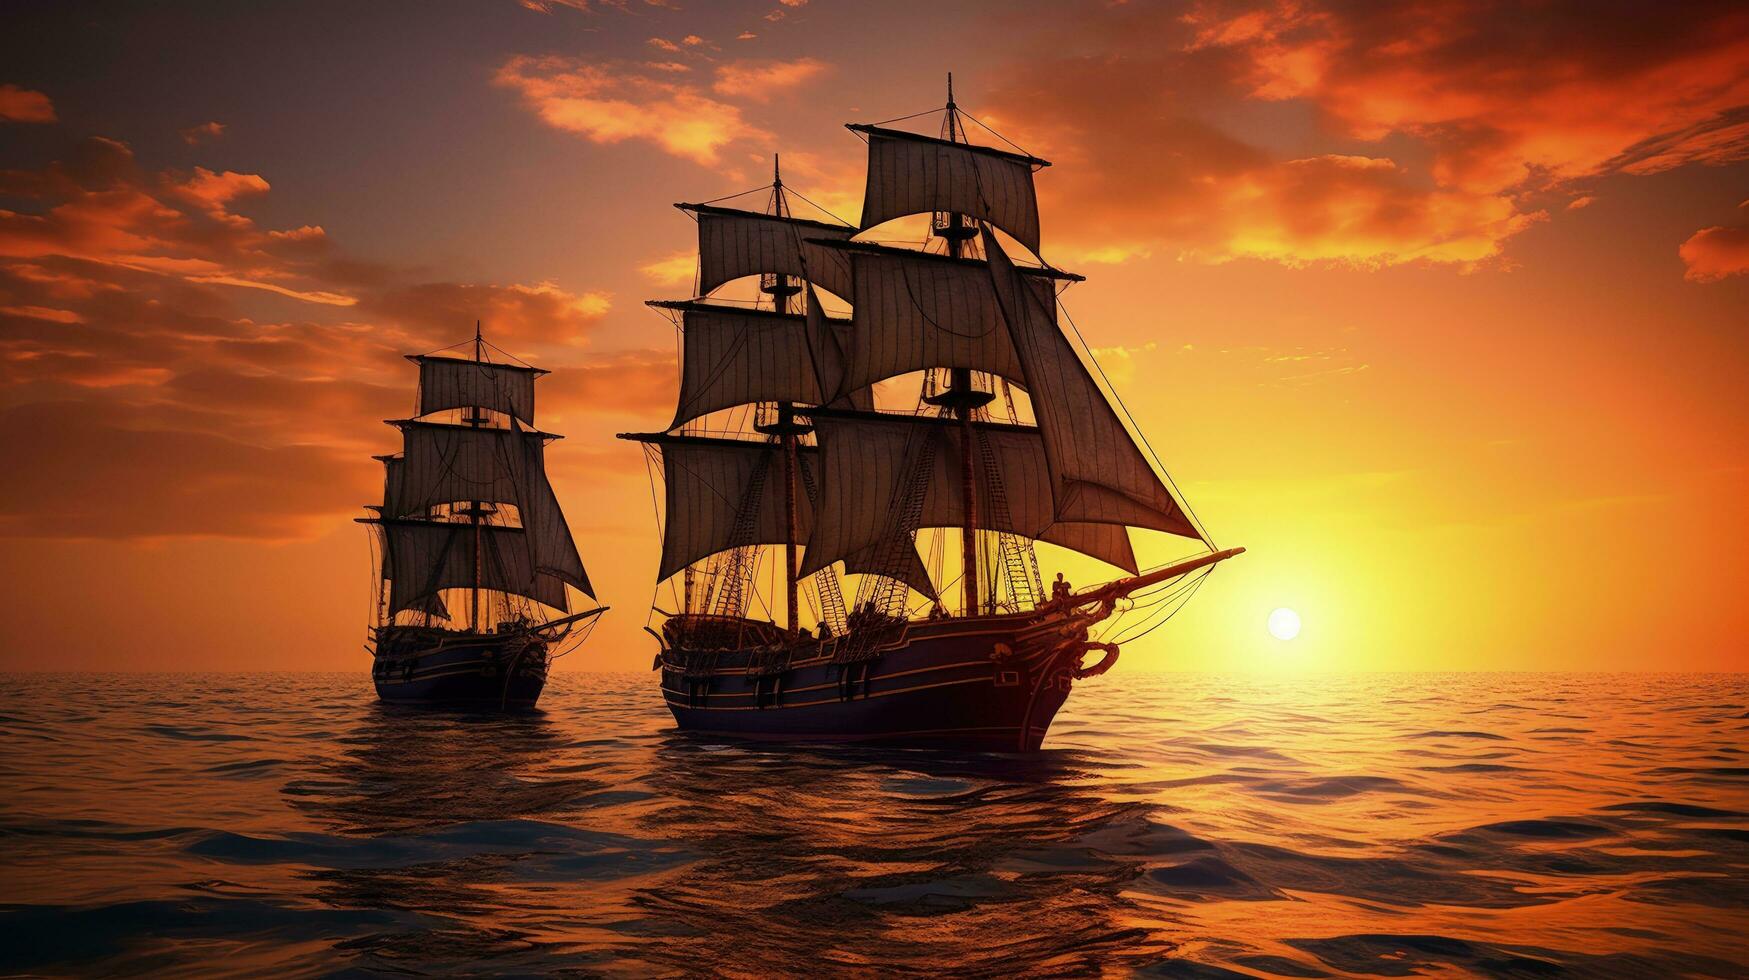 dos barcos crucero a puesta de sol. silueta concepto foto